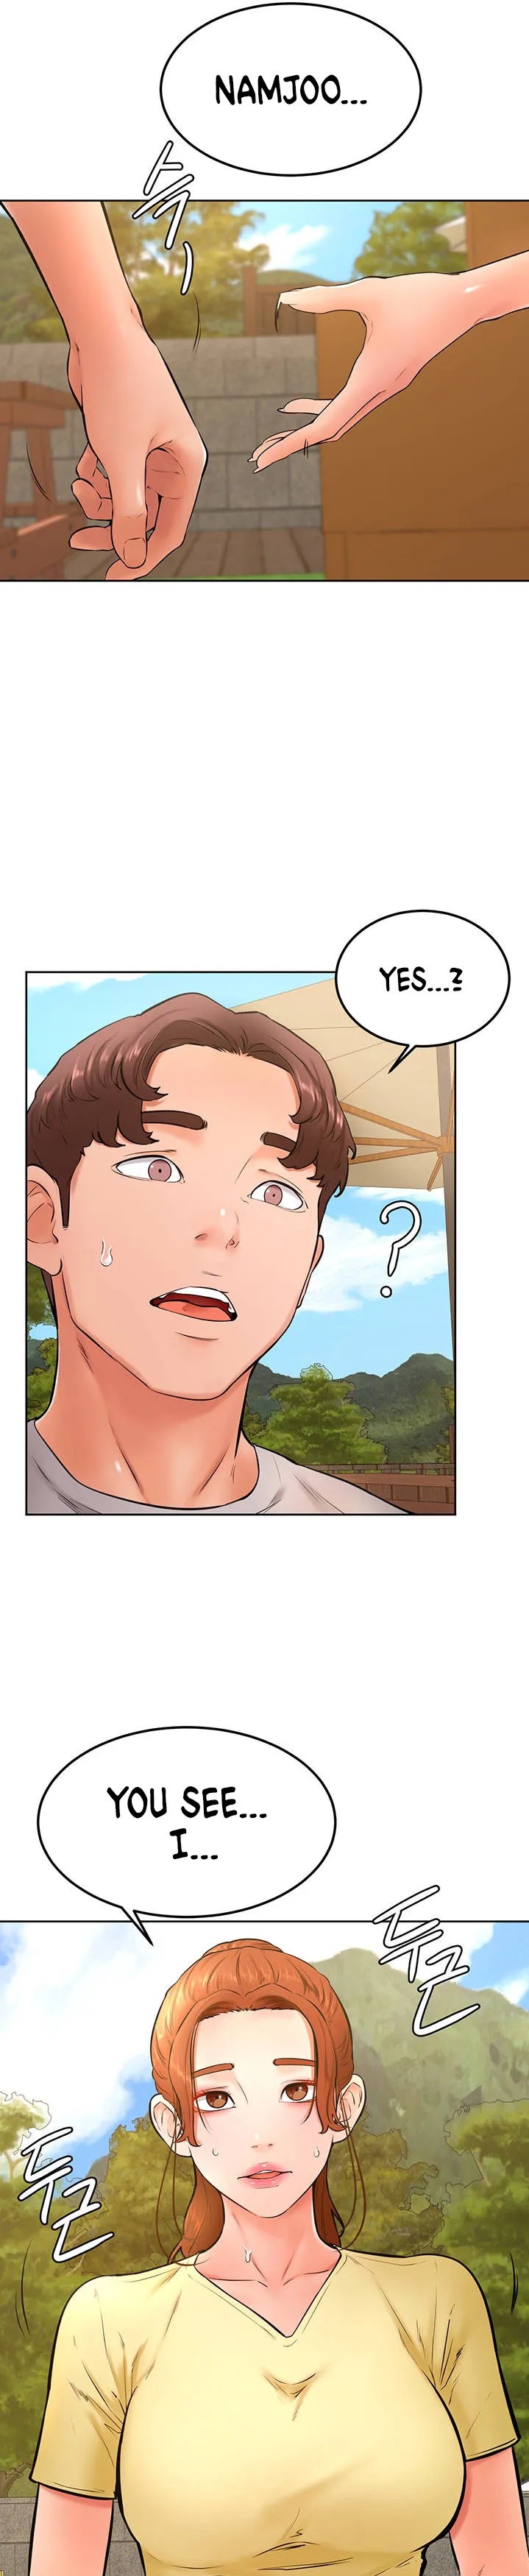 Cheer Up, Namjoo - Chapter 25 Page 5